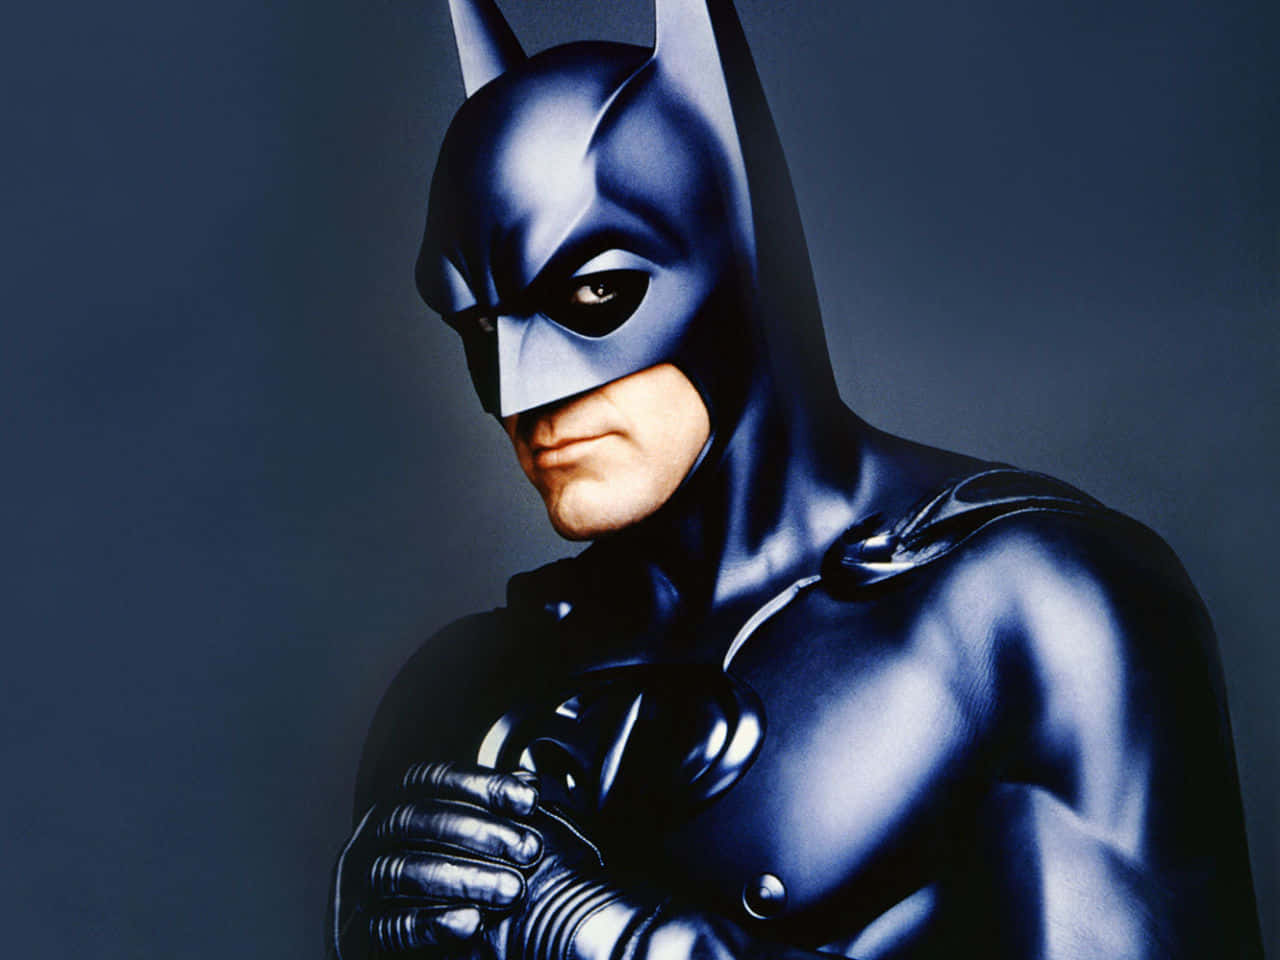 The Dark Knight Rises: Batman in Bat-suit Wallpaper